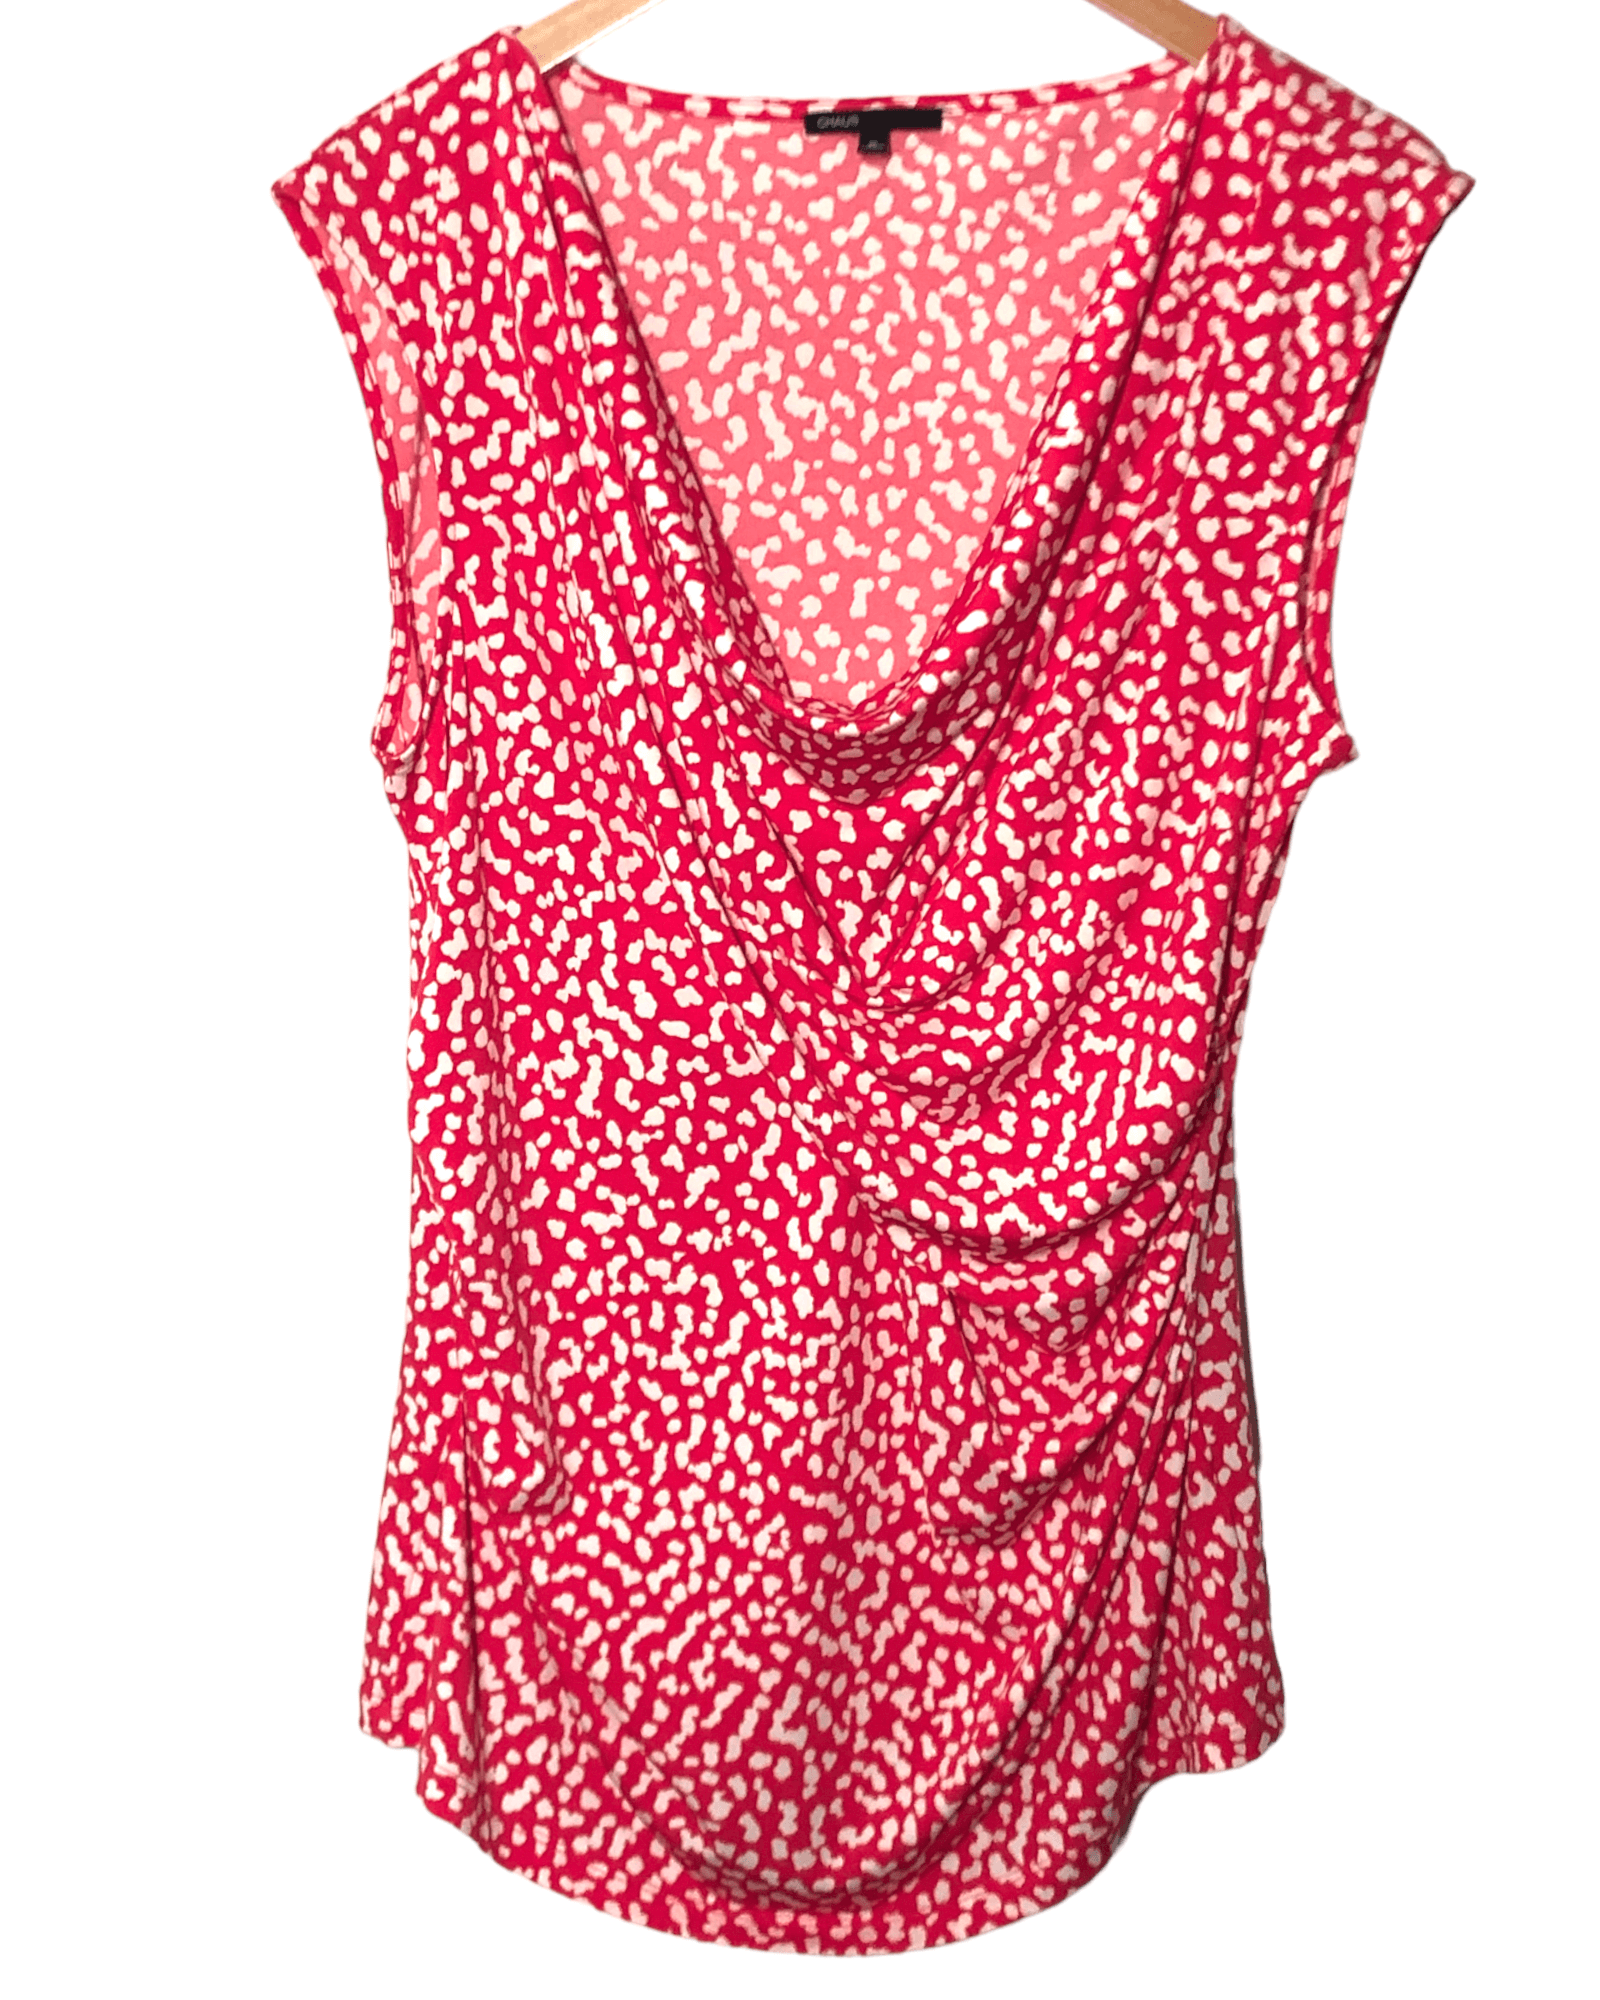 Bright Spring CHAUS coral dot sleeveless cowl drape top blouse